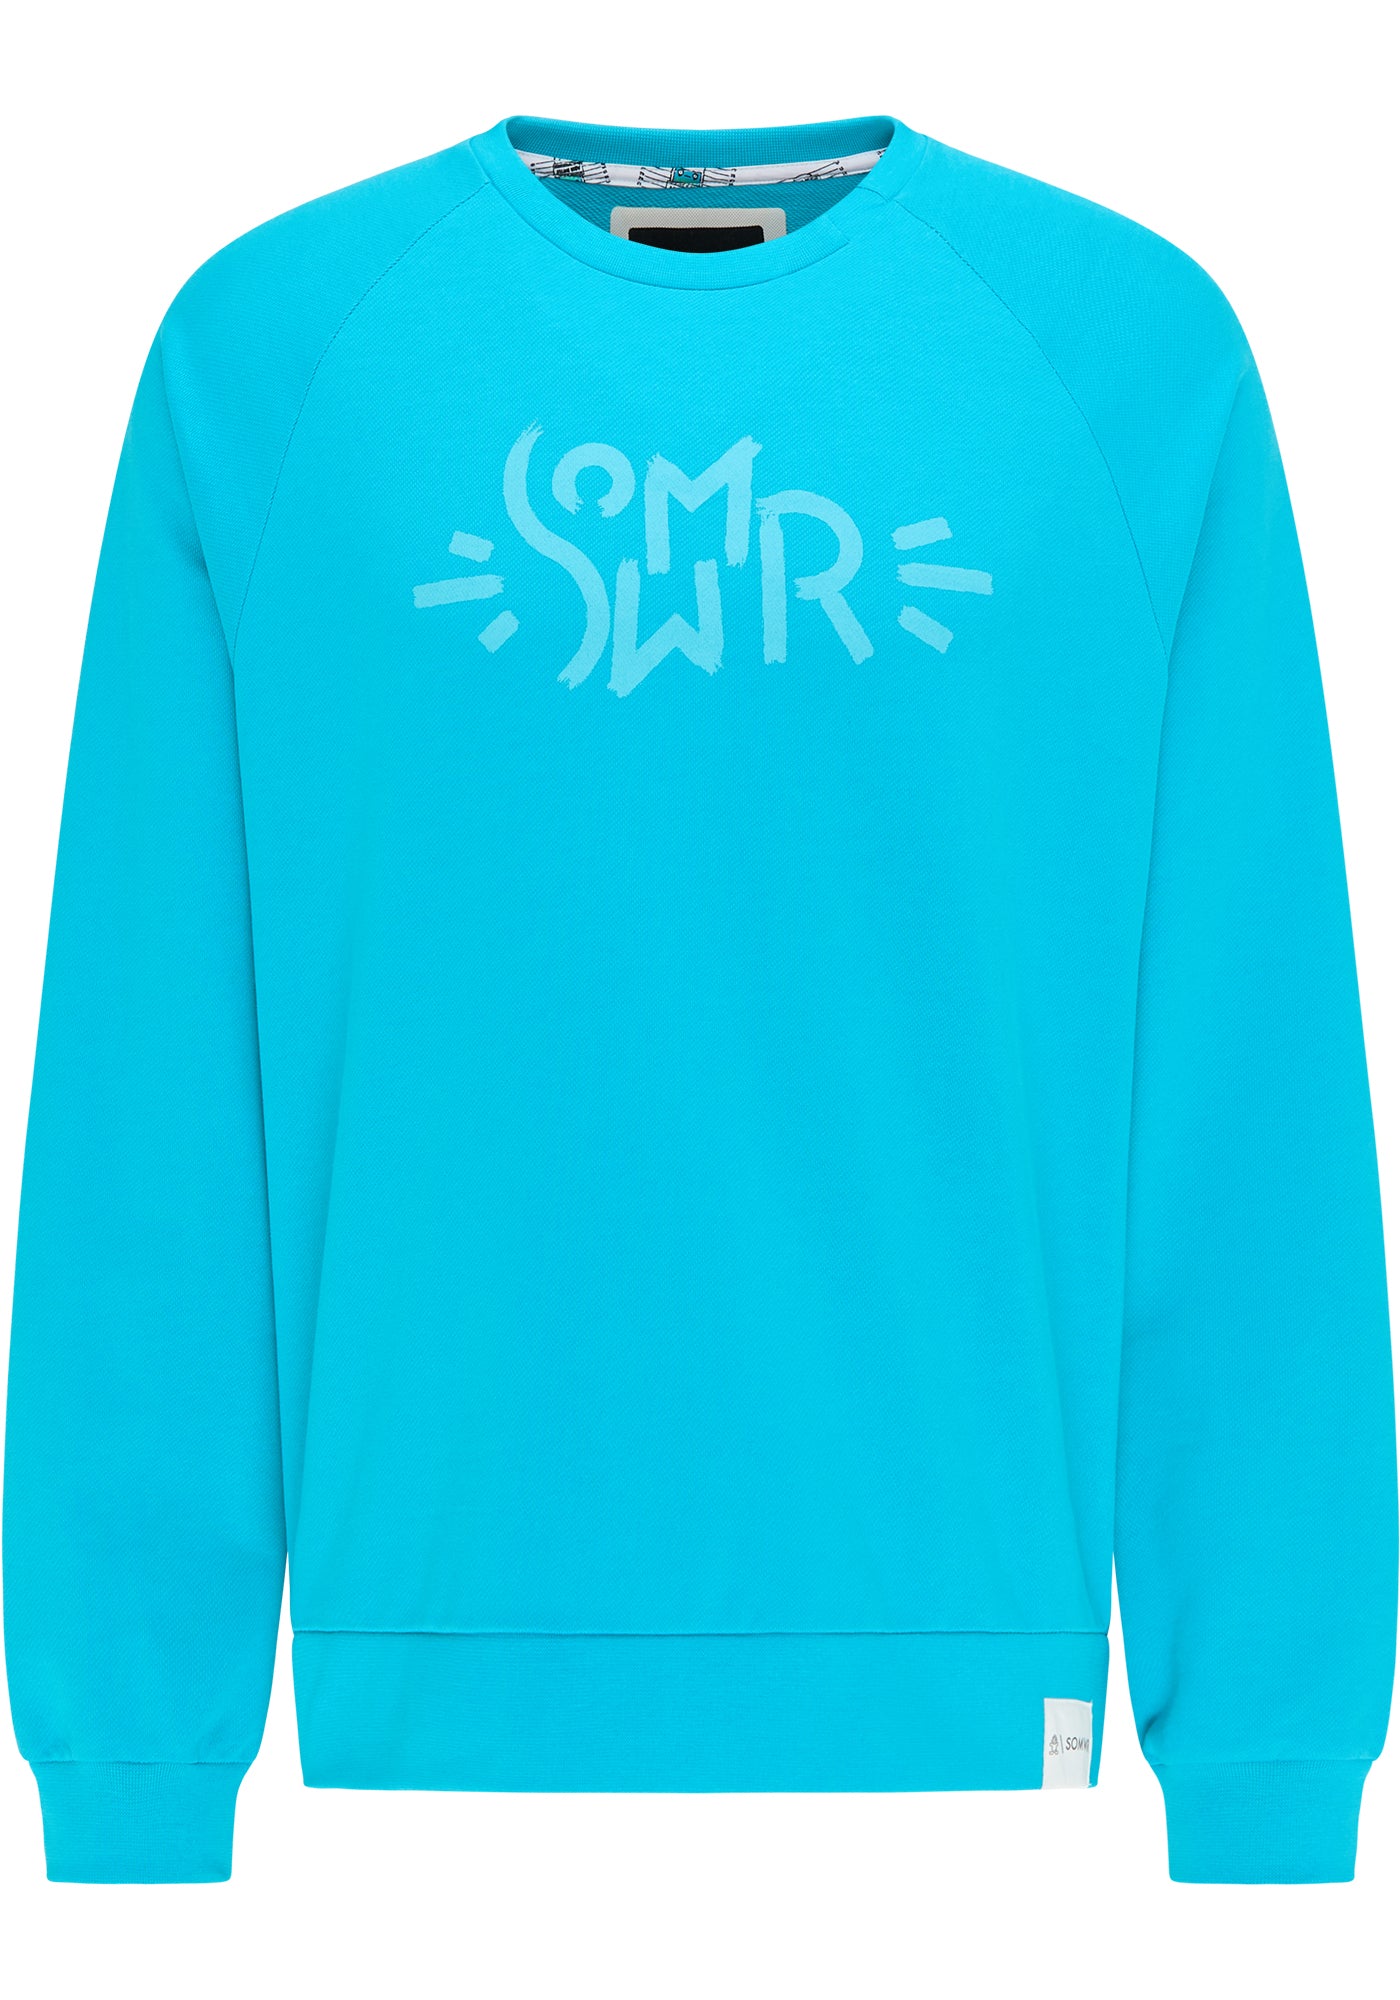 SOMWR SMILEY SWEATER Sweater BLU003